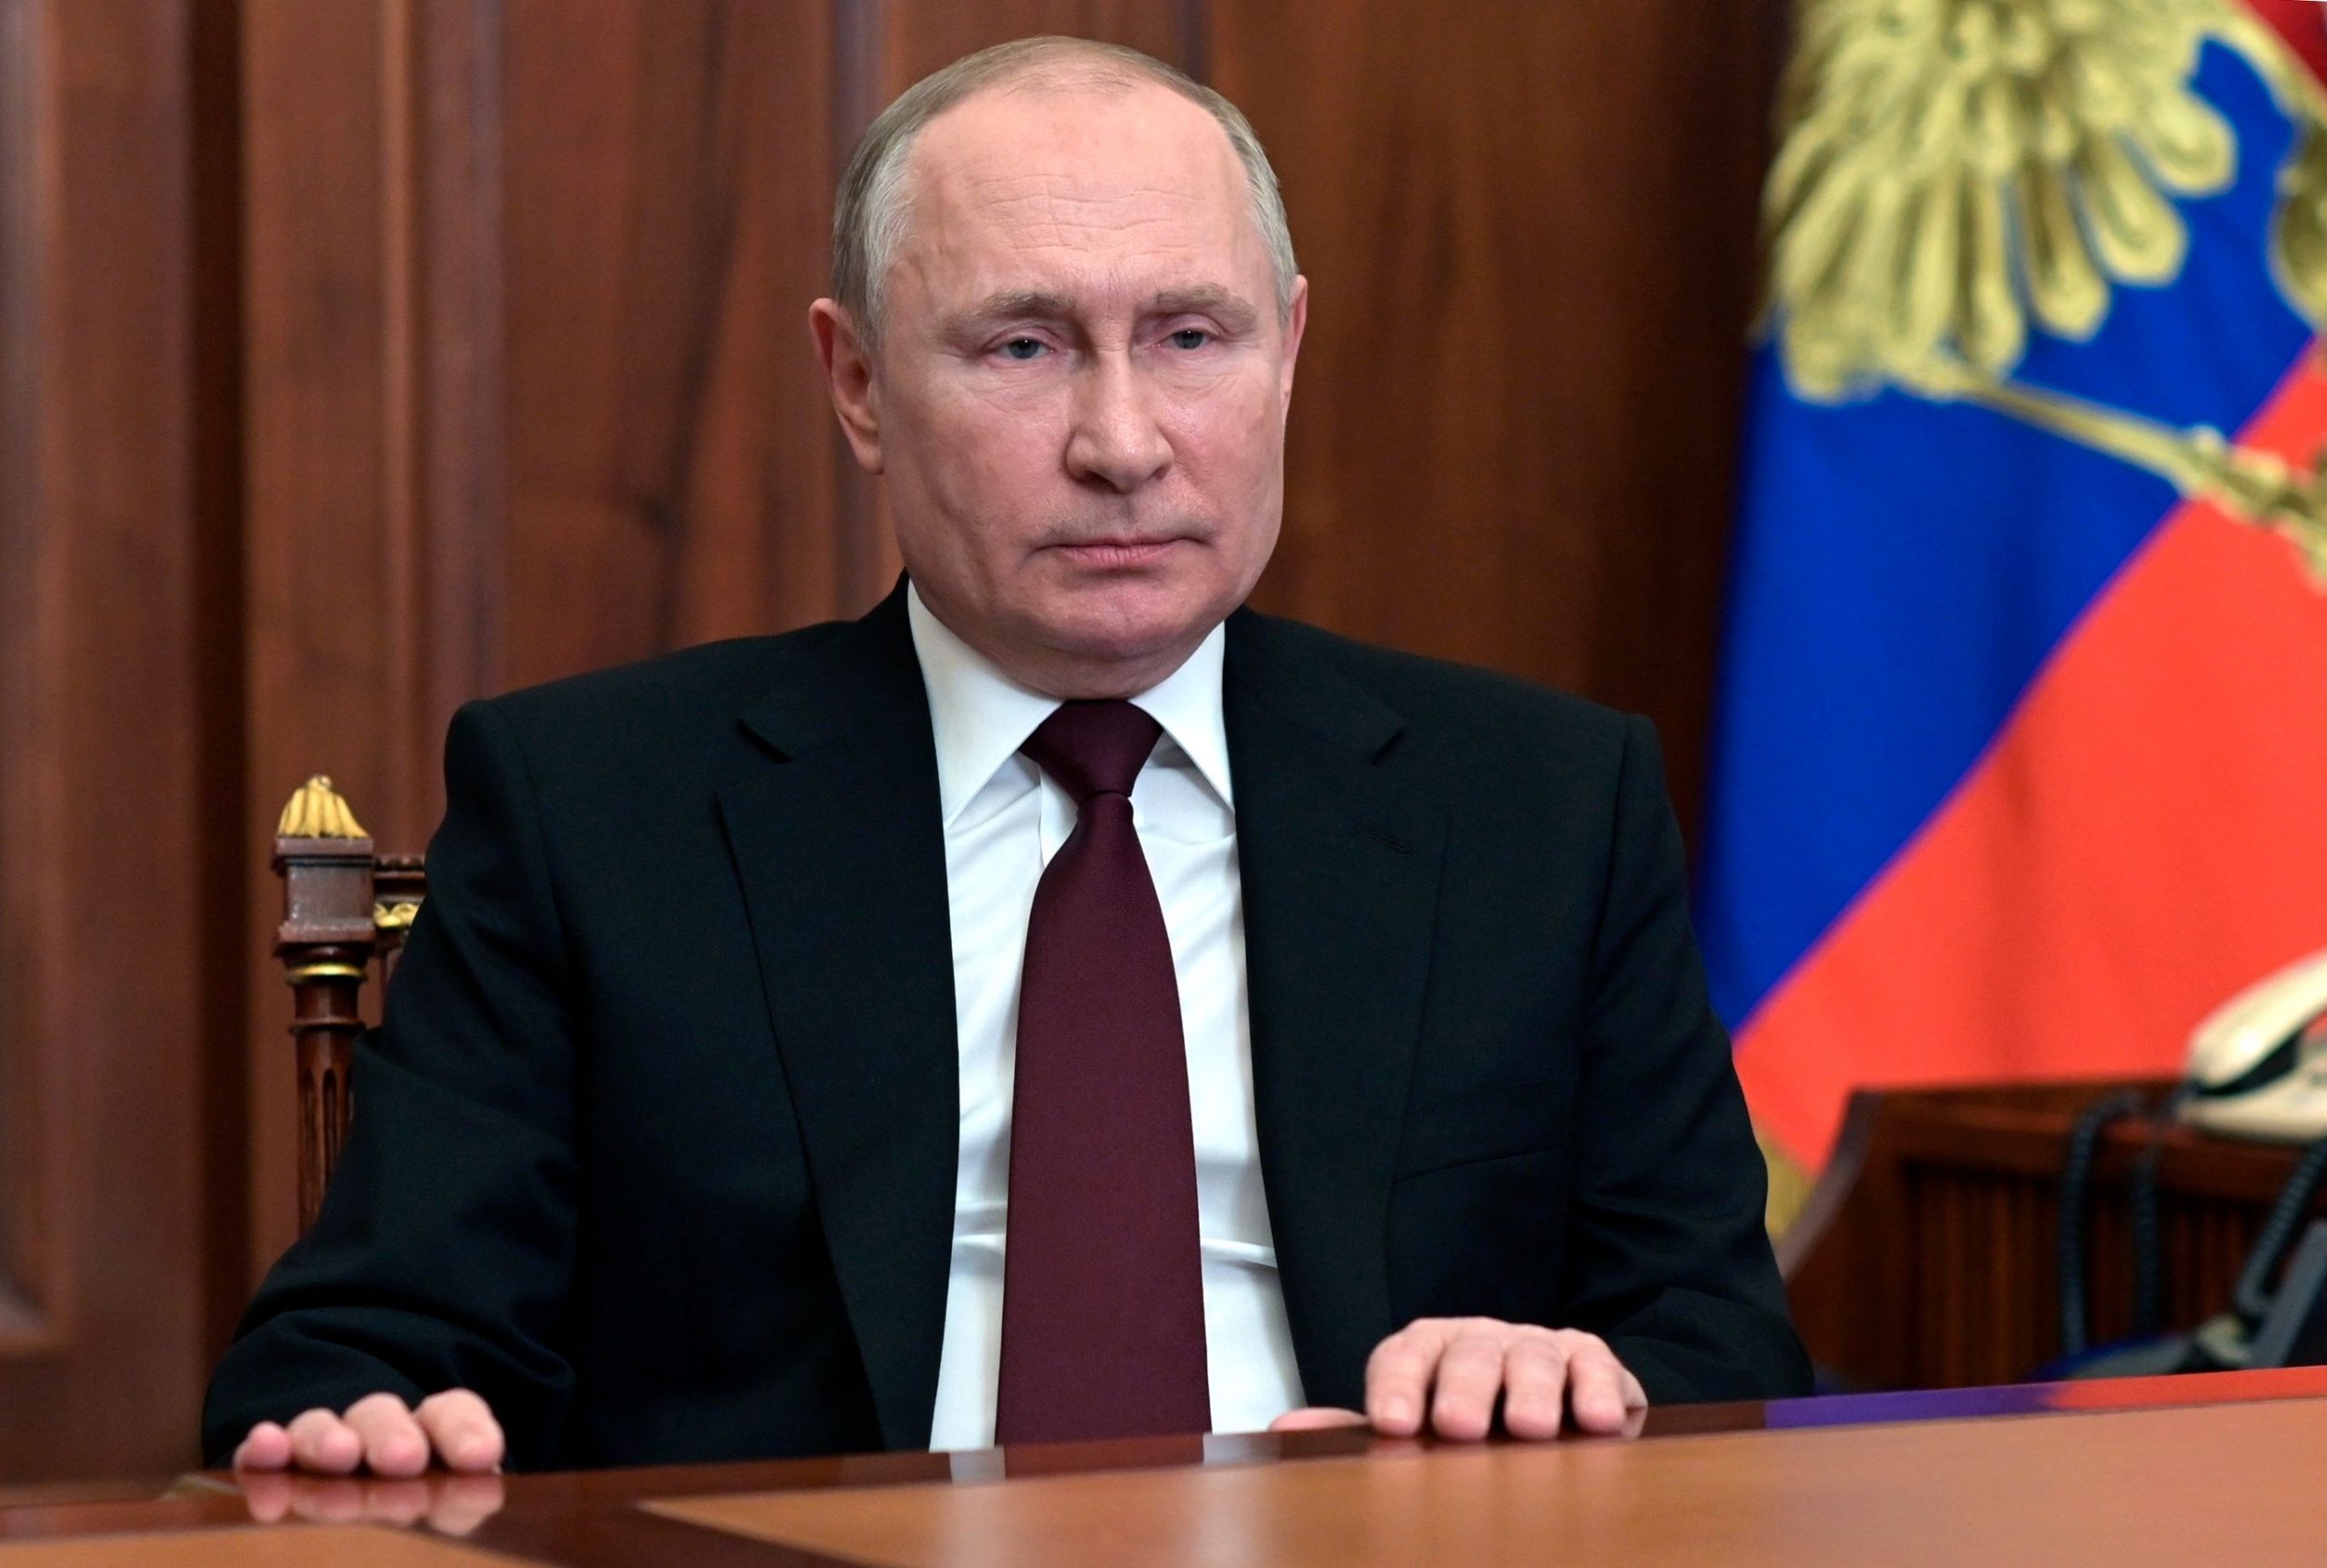 US distances itself from Senator’s proposal to ‘take out’ Vladimir Putin